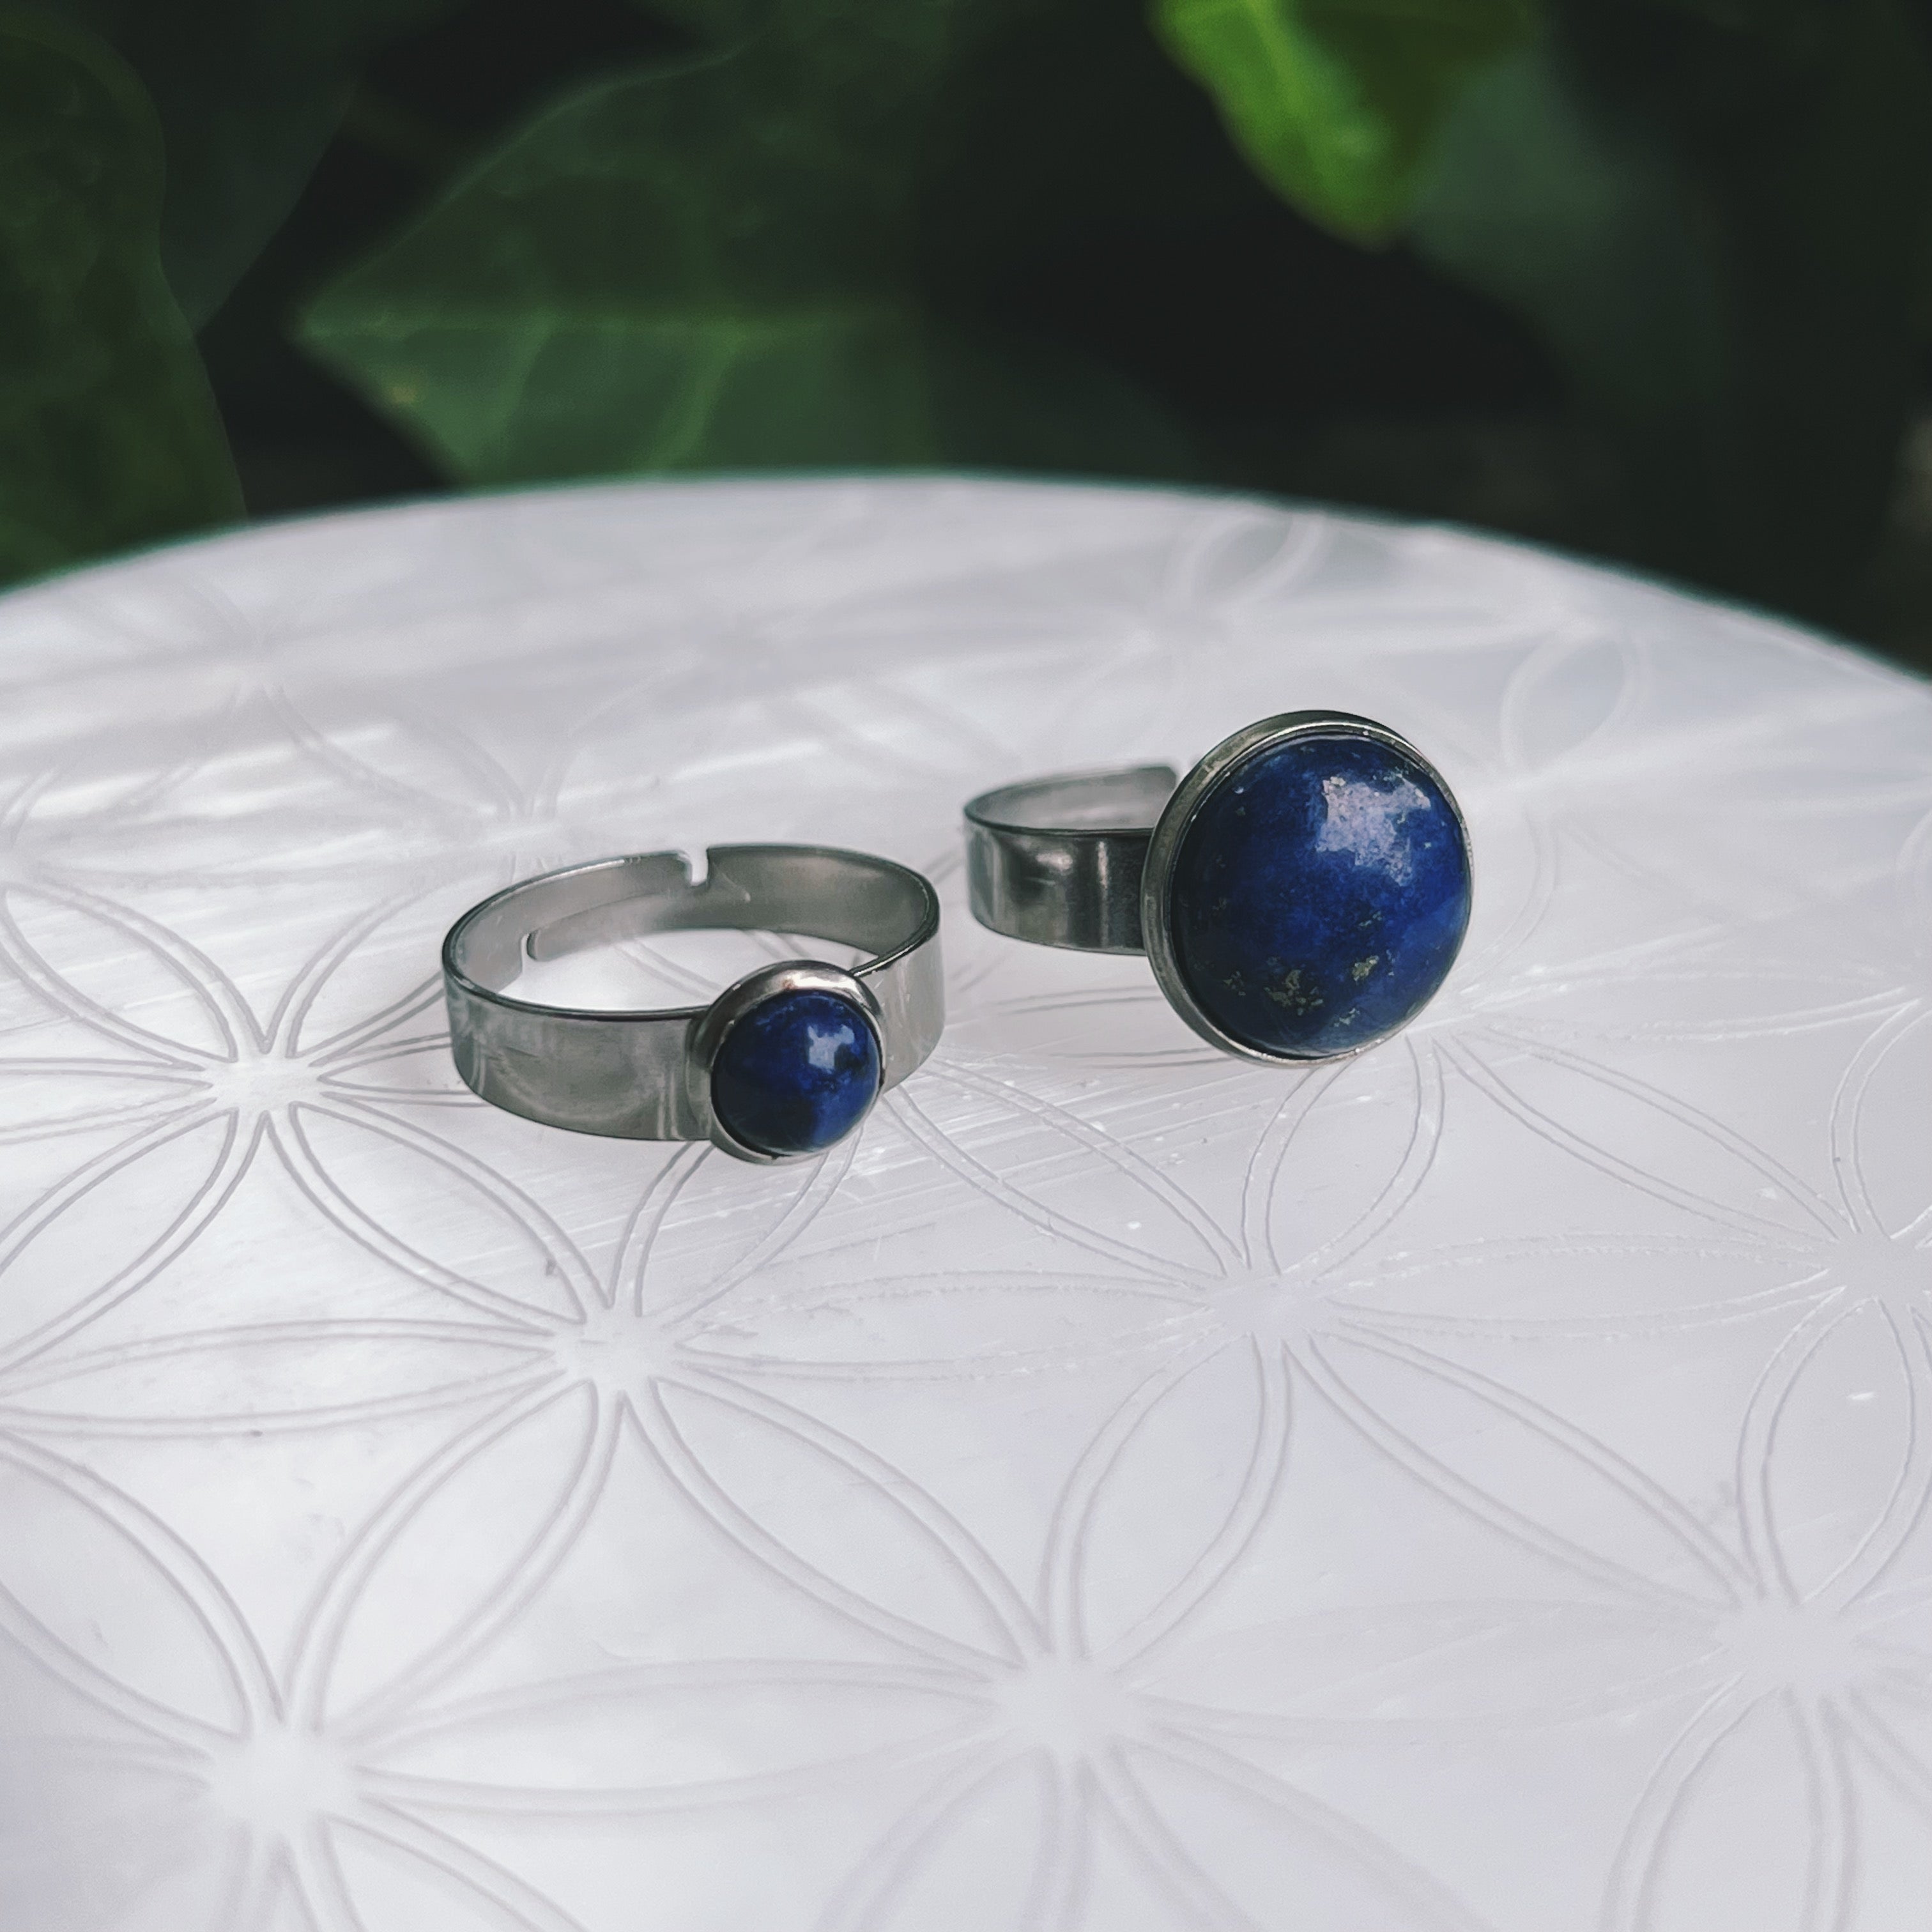 (1) Lapis Lazuli Stainless Steel Adjustable Ring